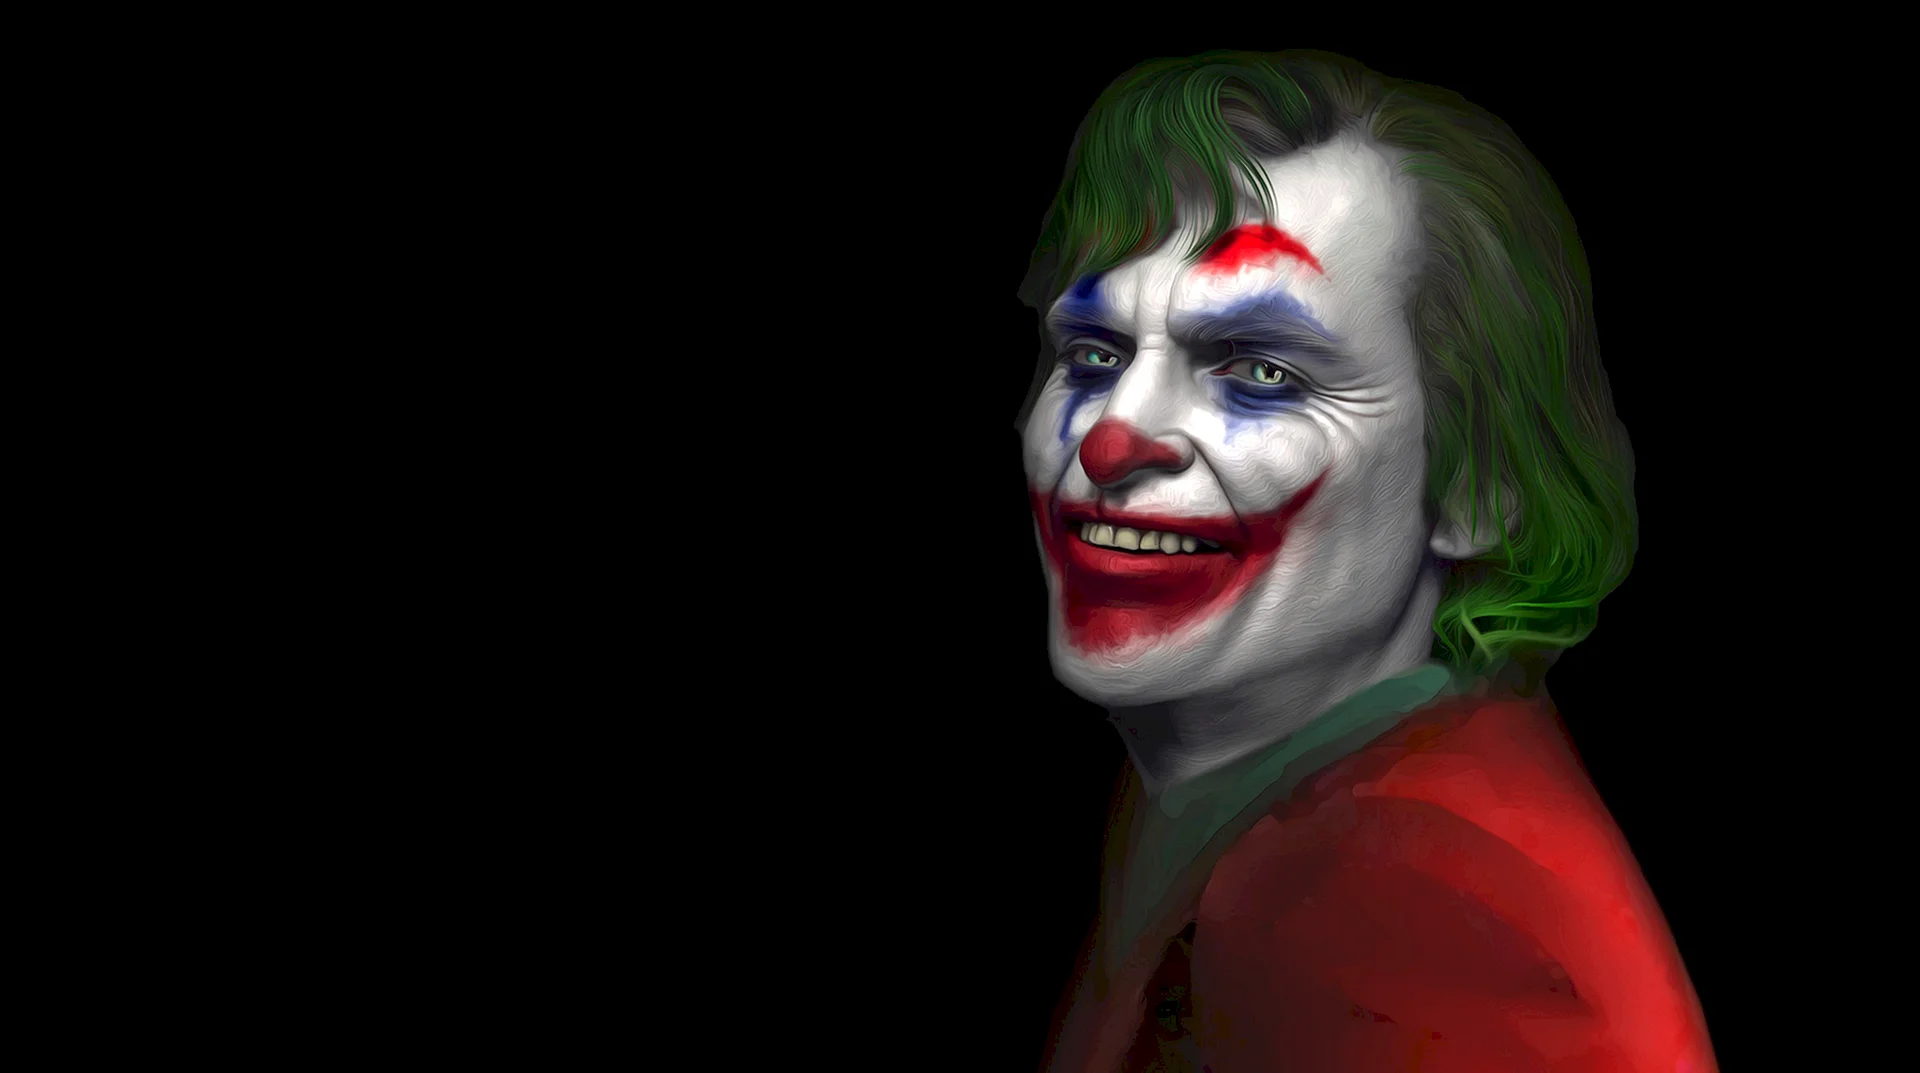 Joker 2019 Wallpaper